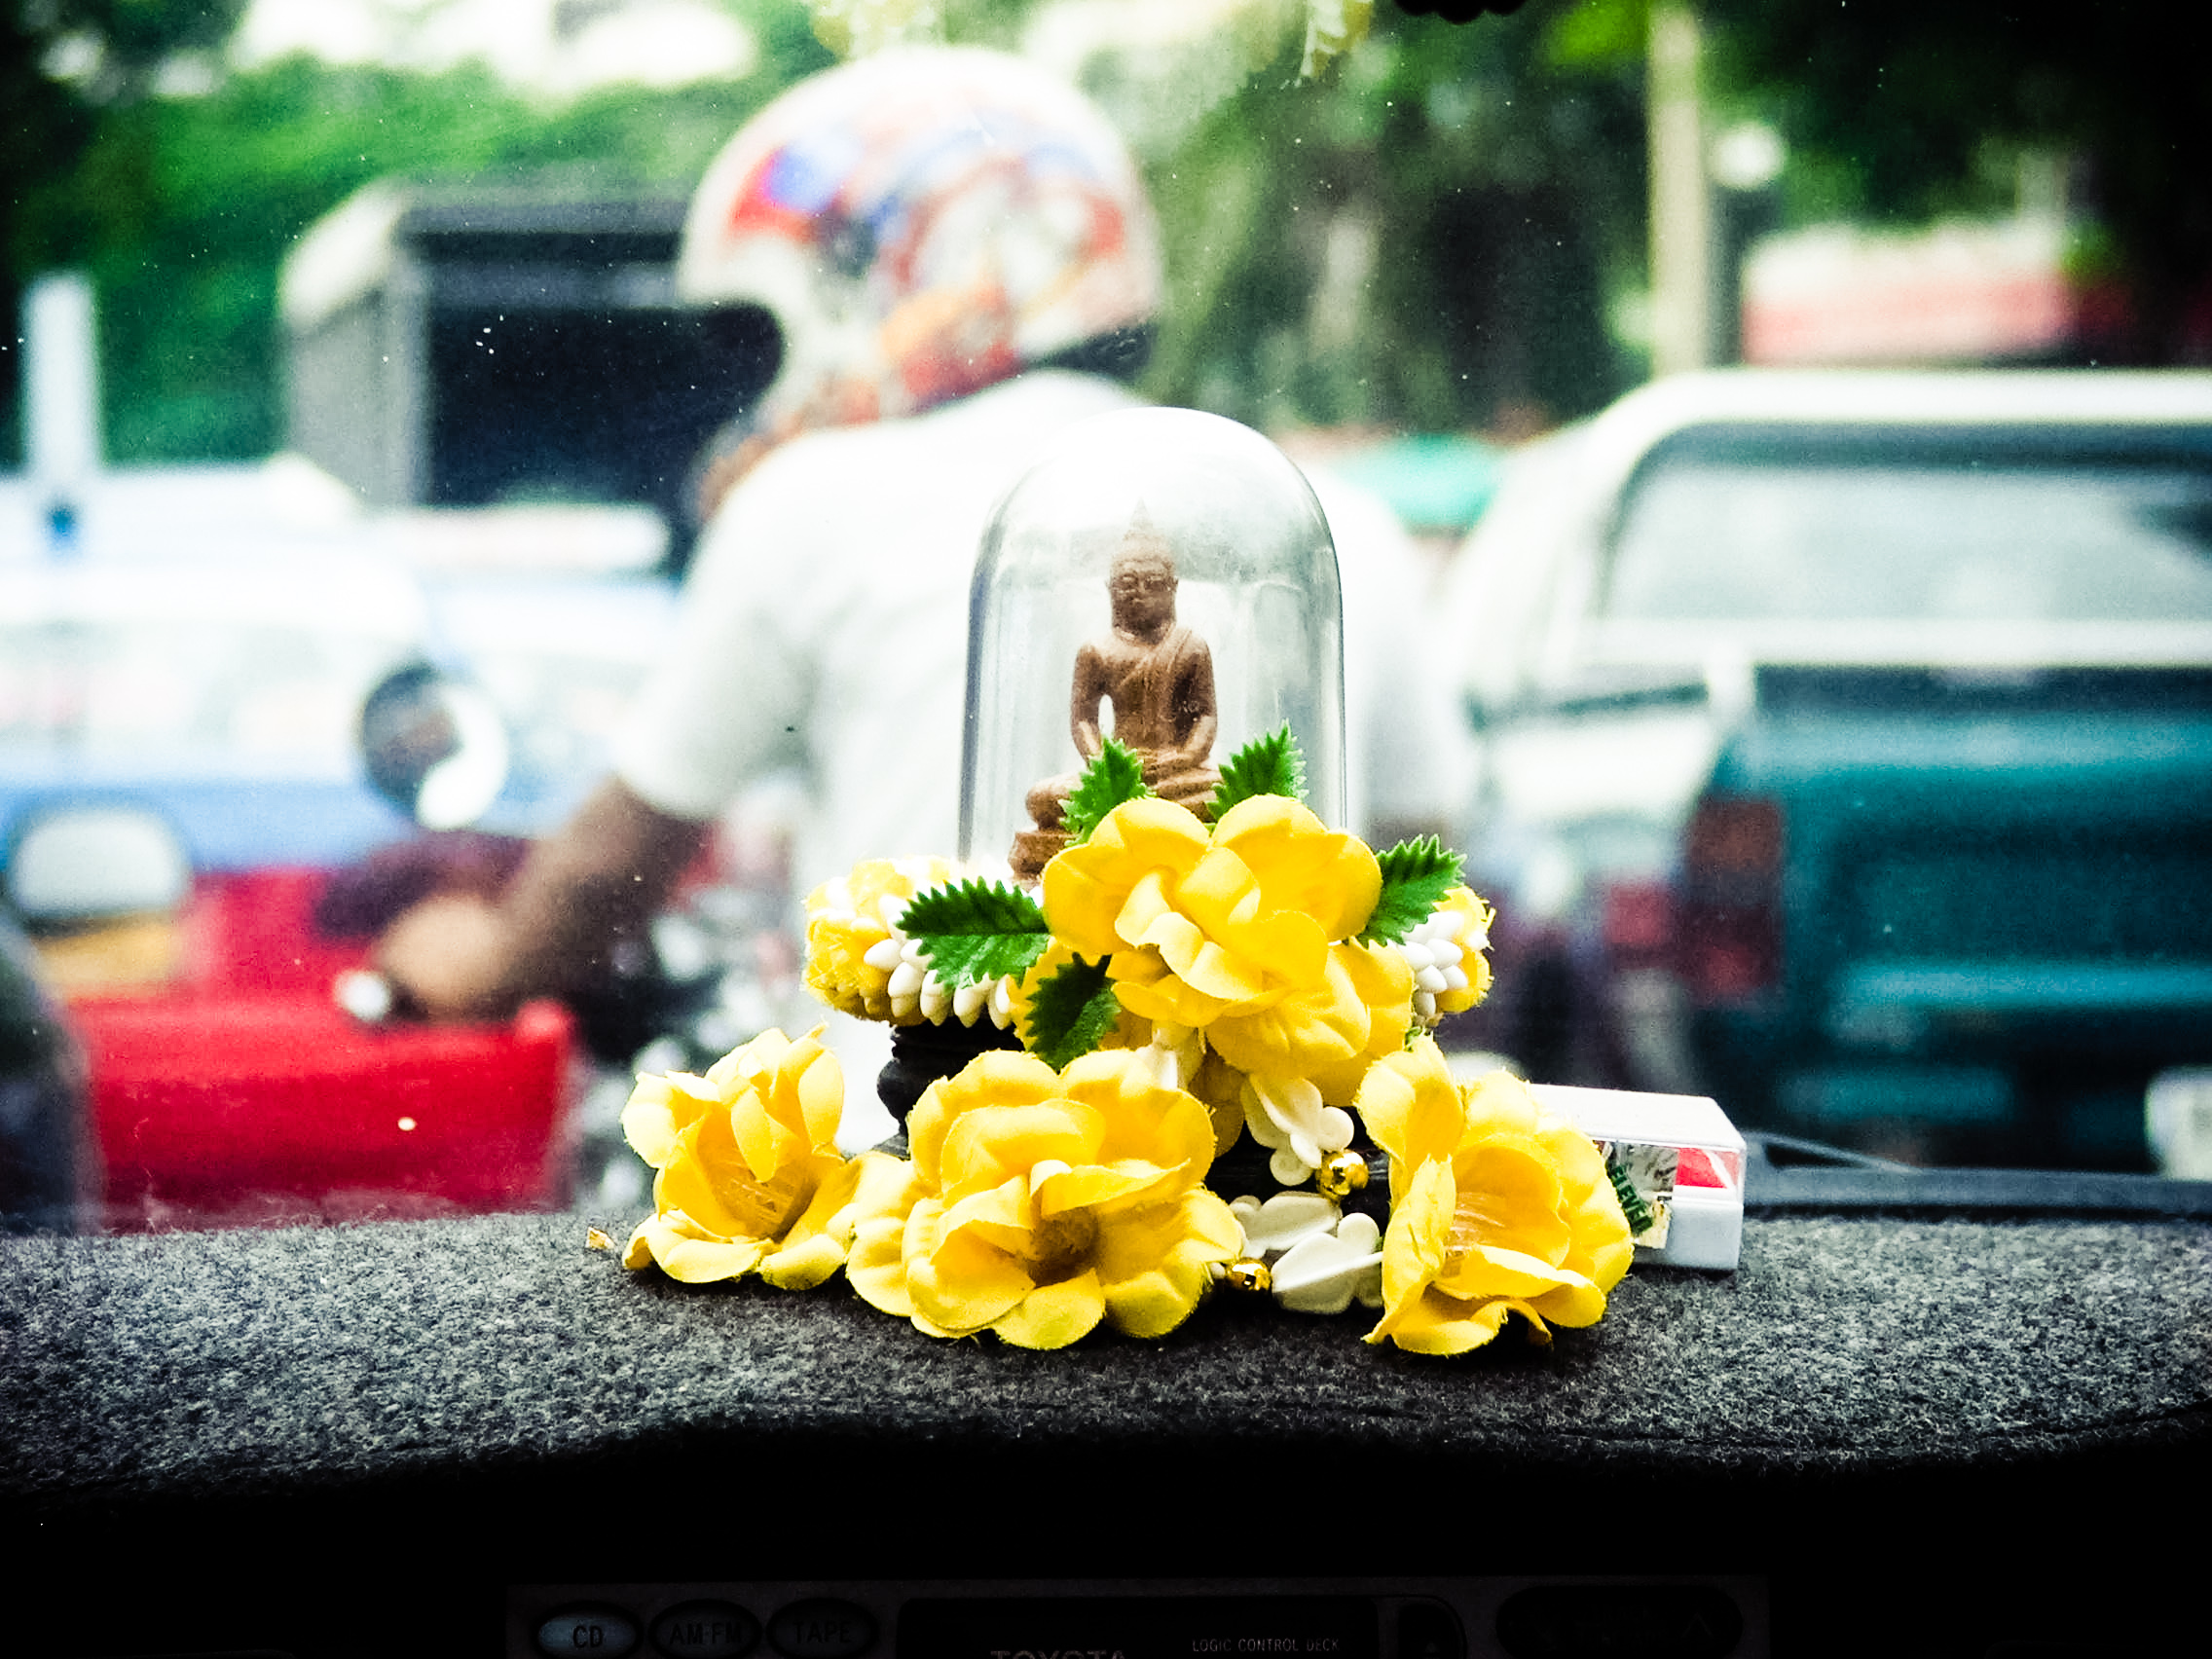 Buddhist symbol in car thailand photo